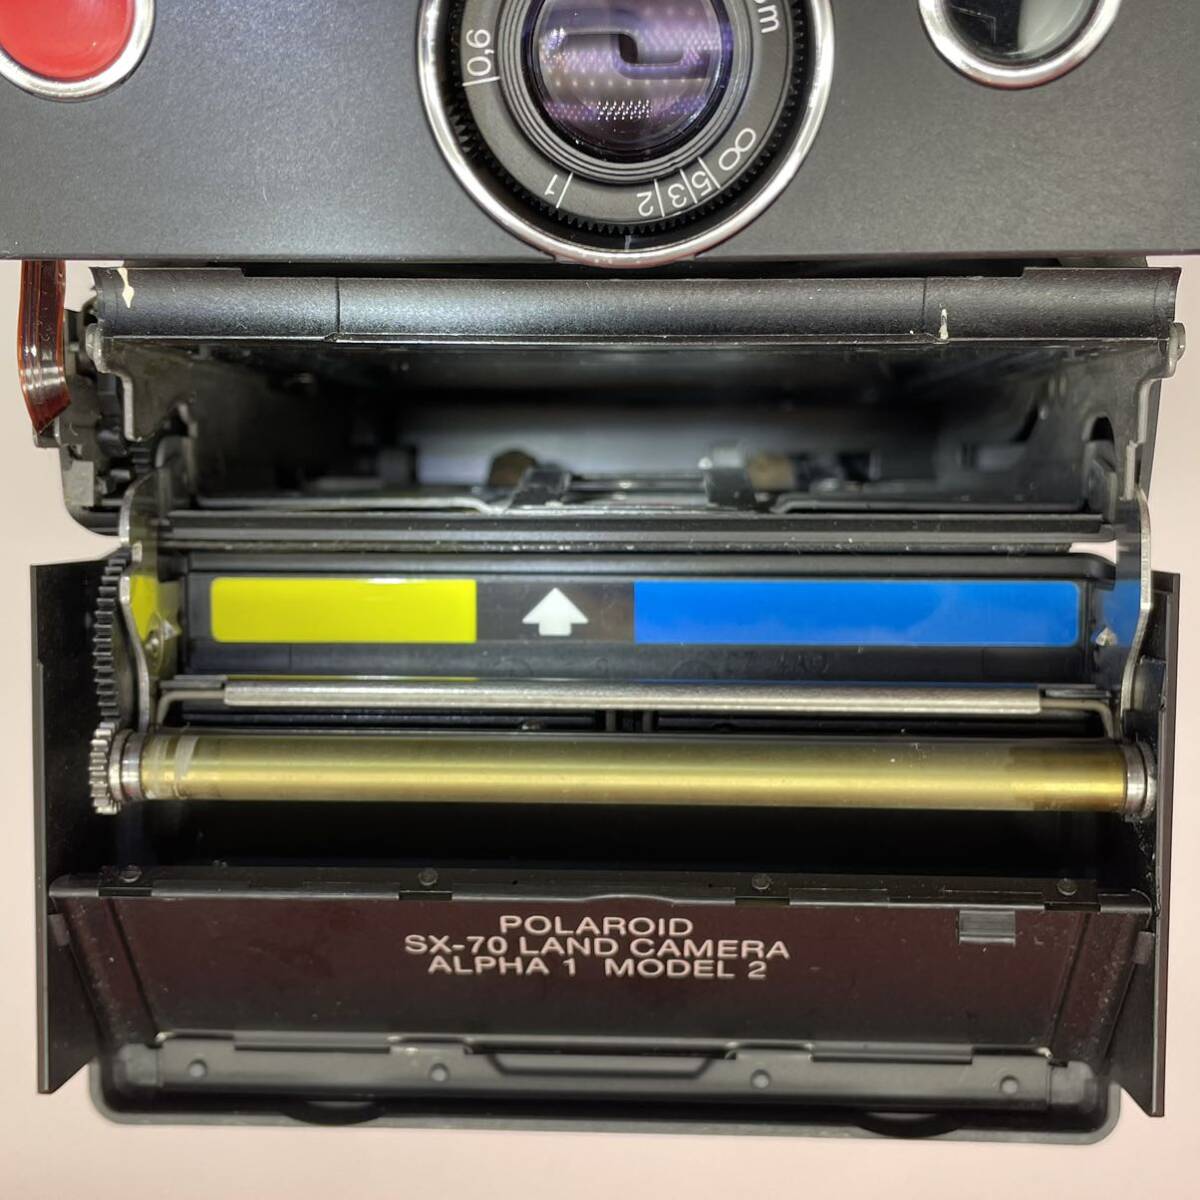 * Polaroid SX-70 LAND CAMERA ALPHA1 MODEL2 instant camera operation not yet verification Polaroid 